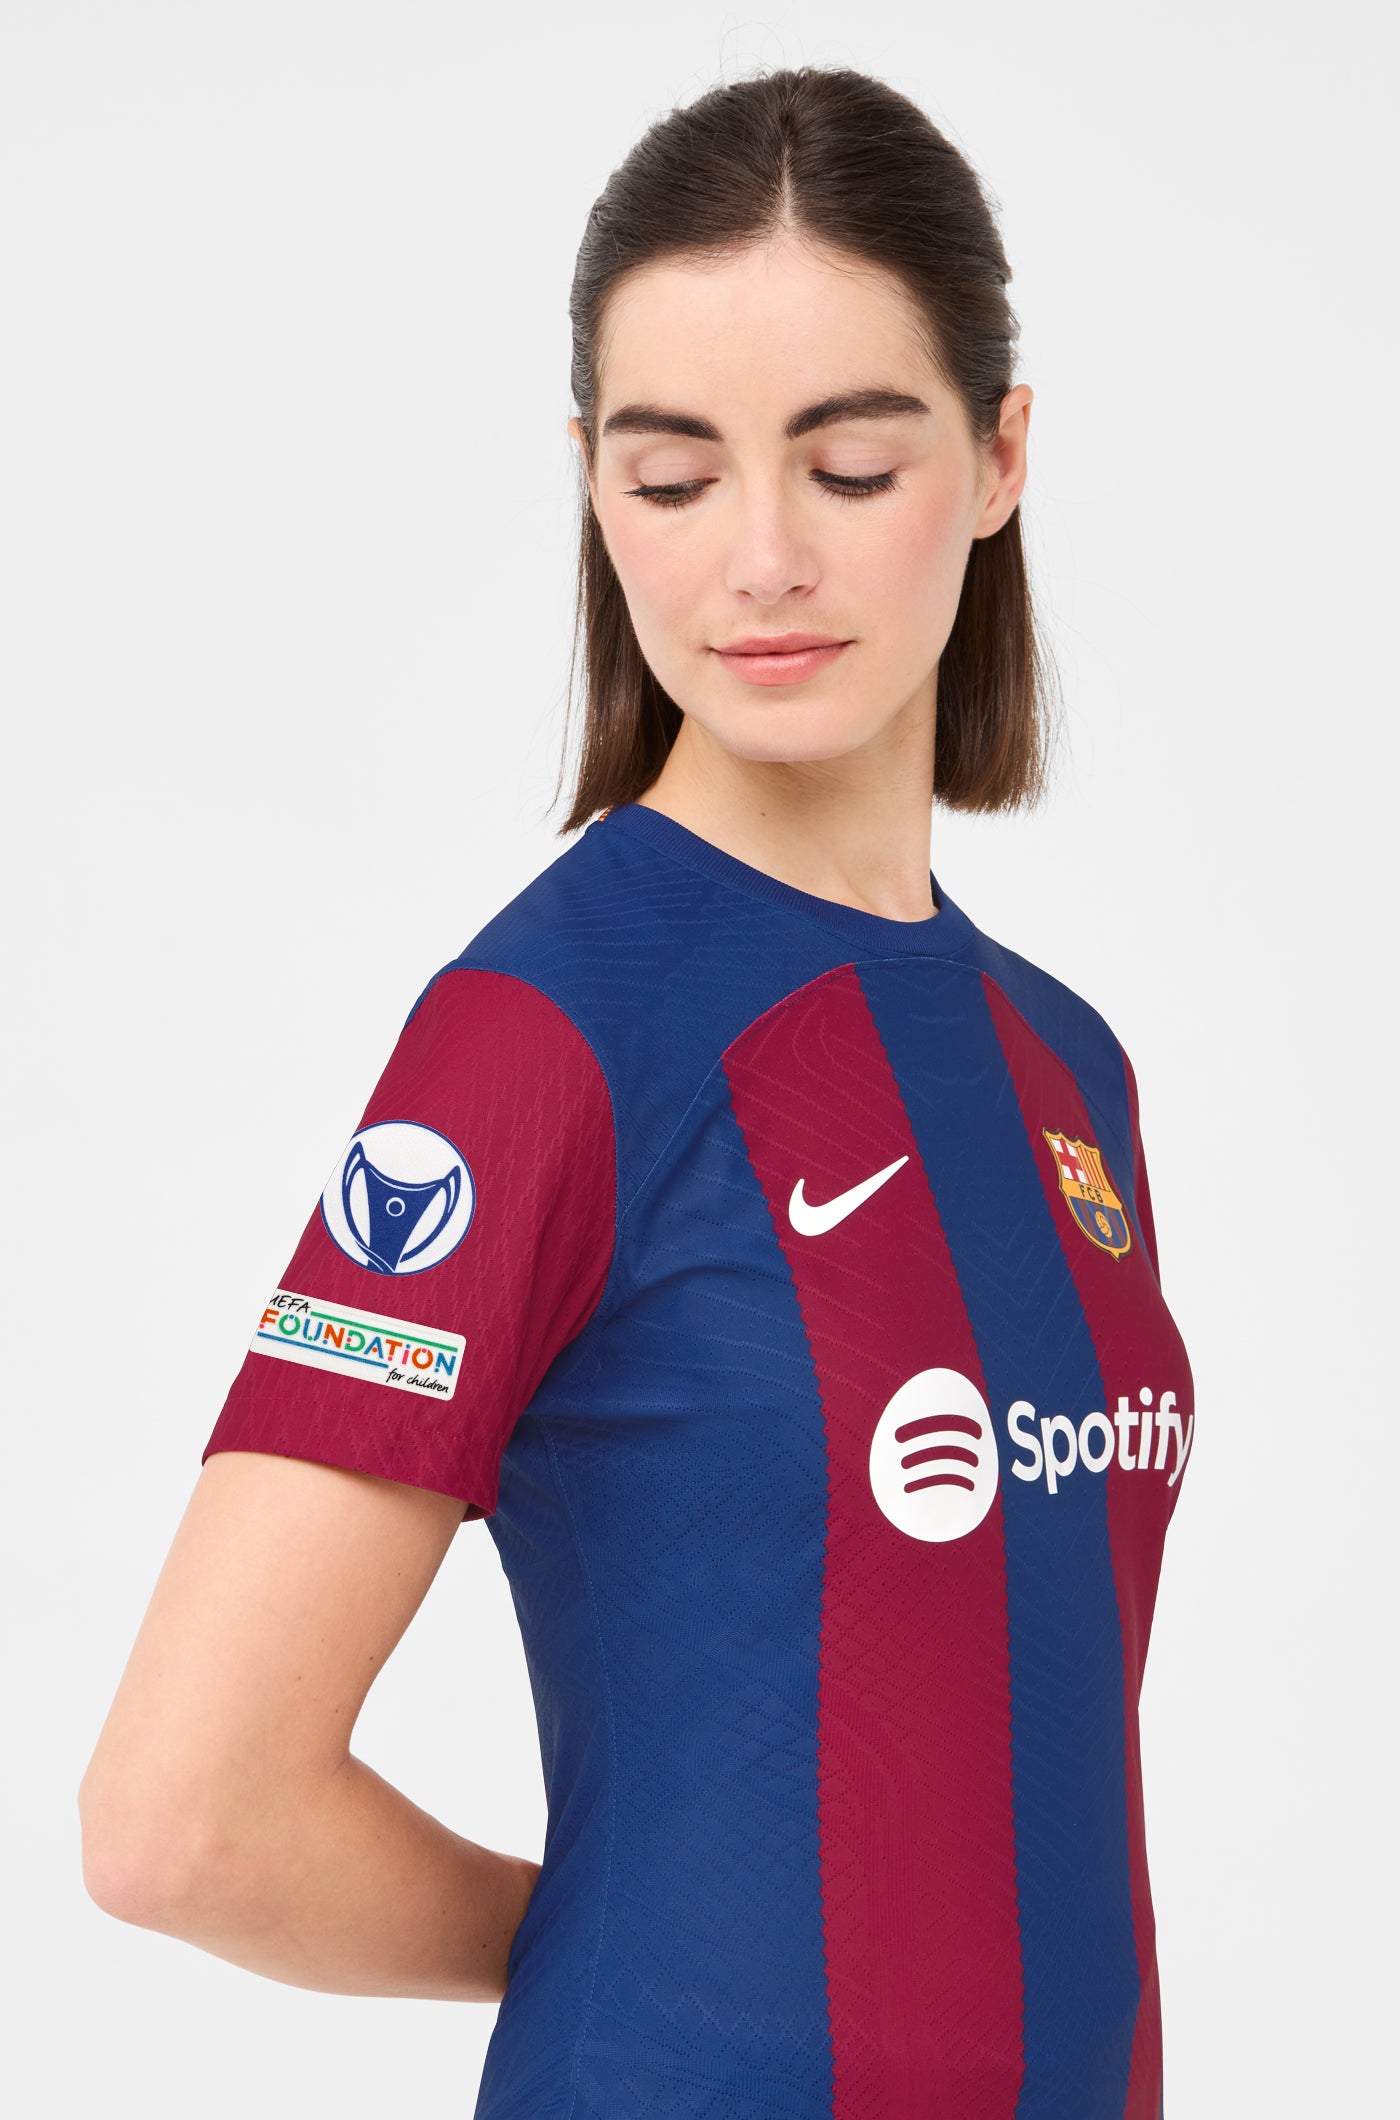 UWCL FC Barcelona Home Shirt 23/24 Player's Edition - Women - BRUNA